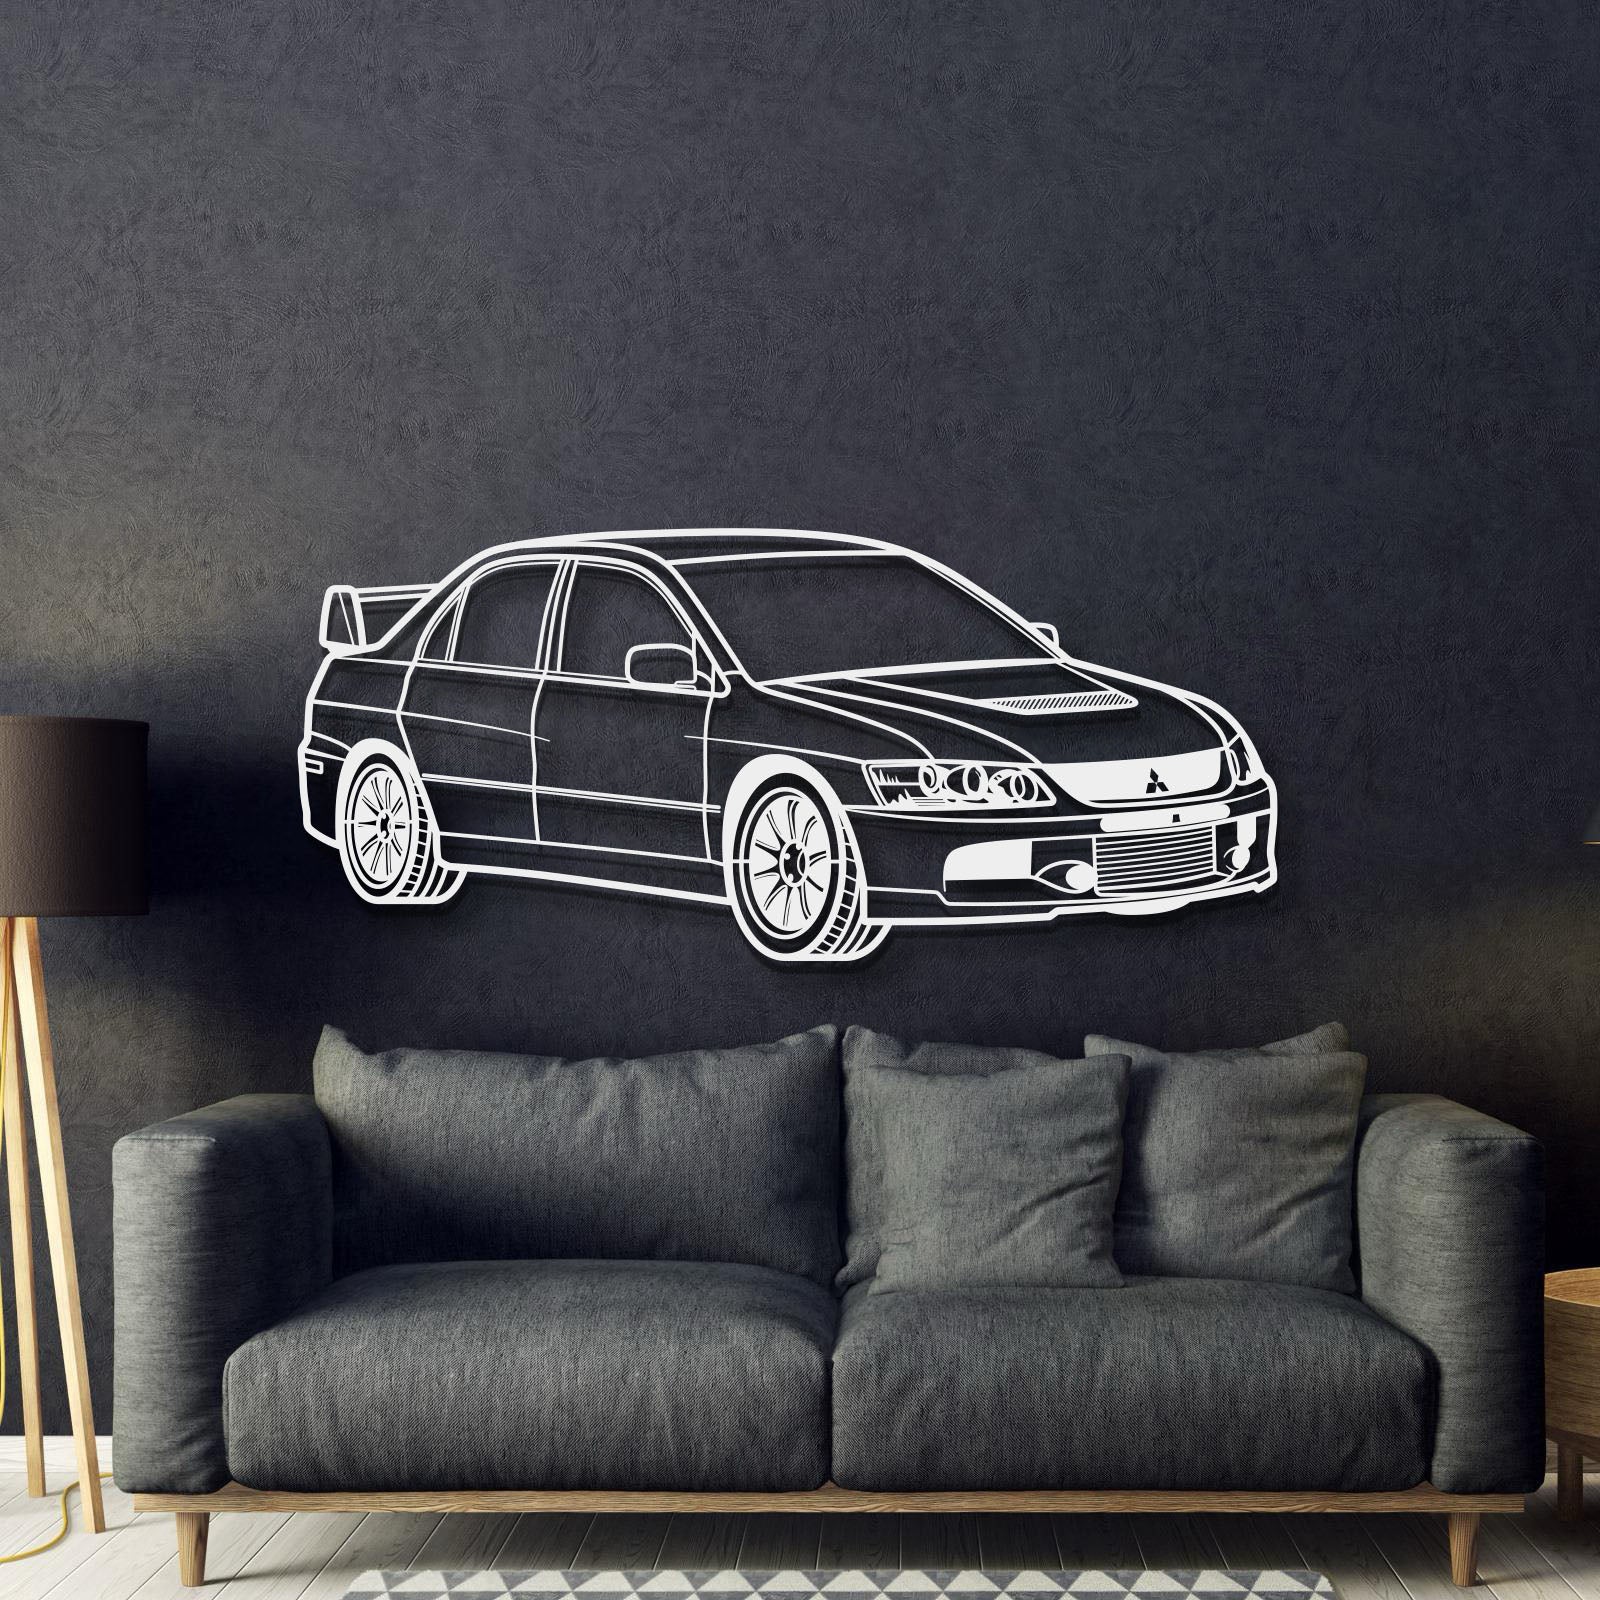 Lancer Evo IX Perspective Metal Car Wall Art - MT1131